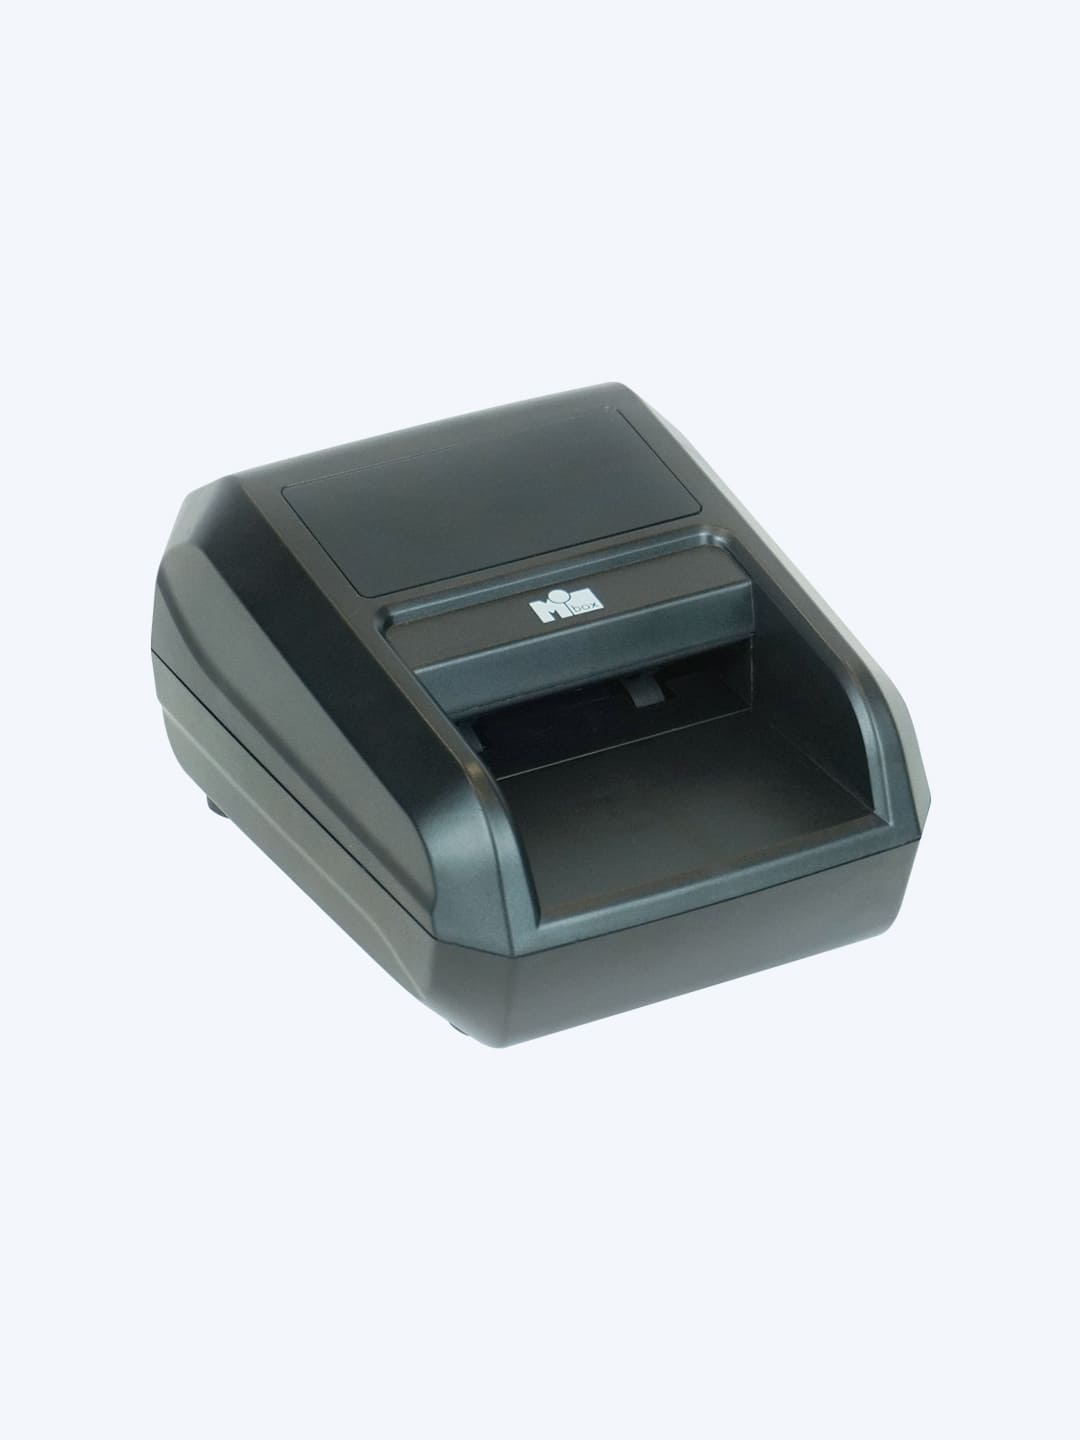 Автоматический детектор валют Mbox AMD-10S с аккумулятором